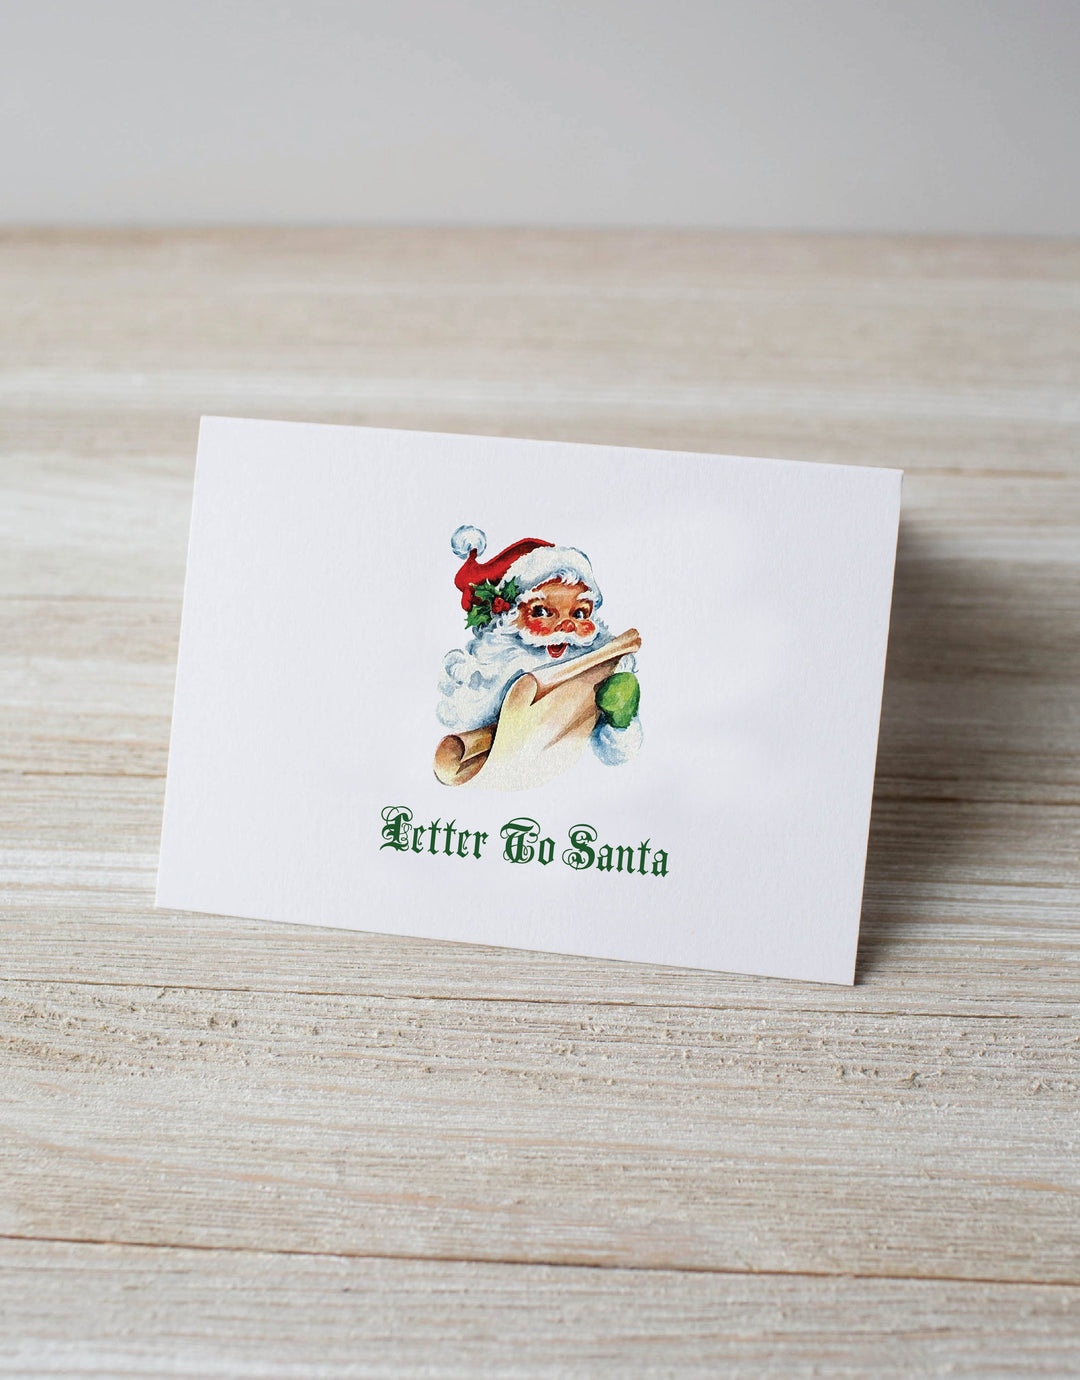 The Anniston Letter to Santa